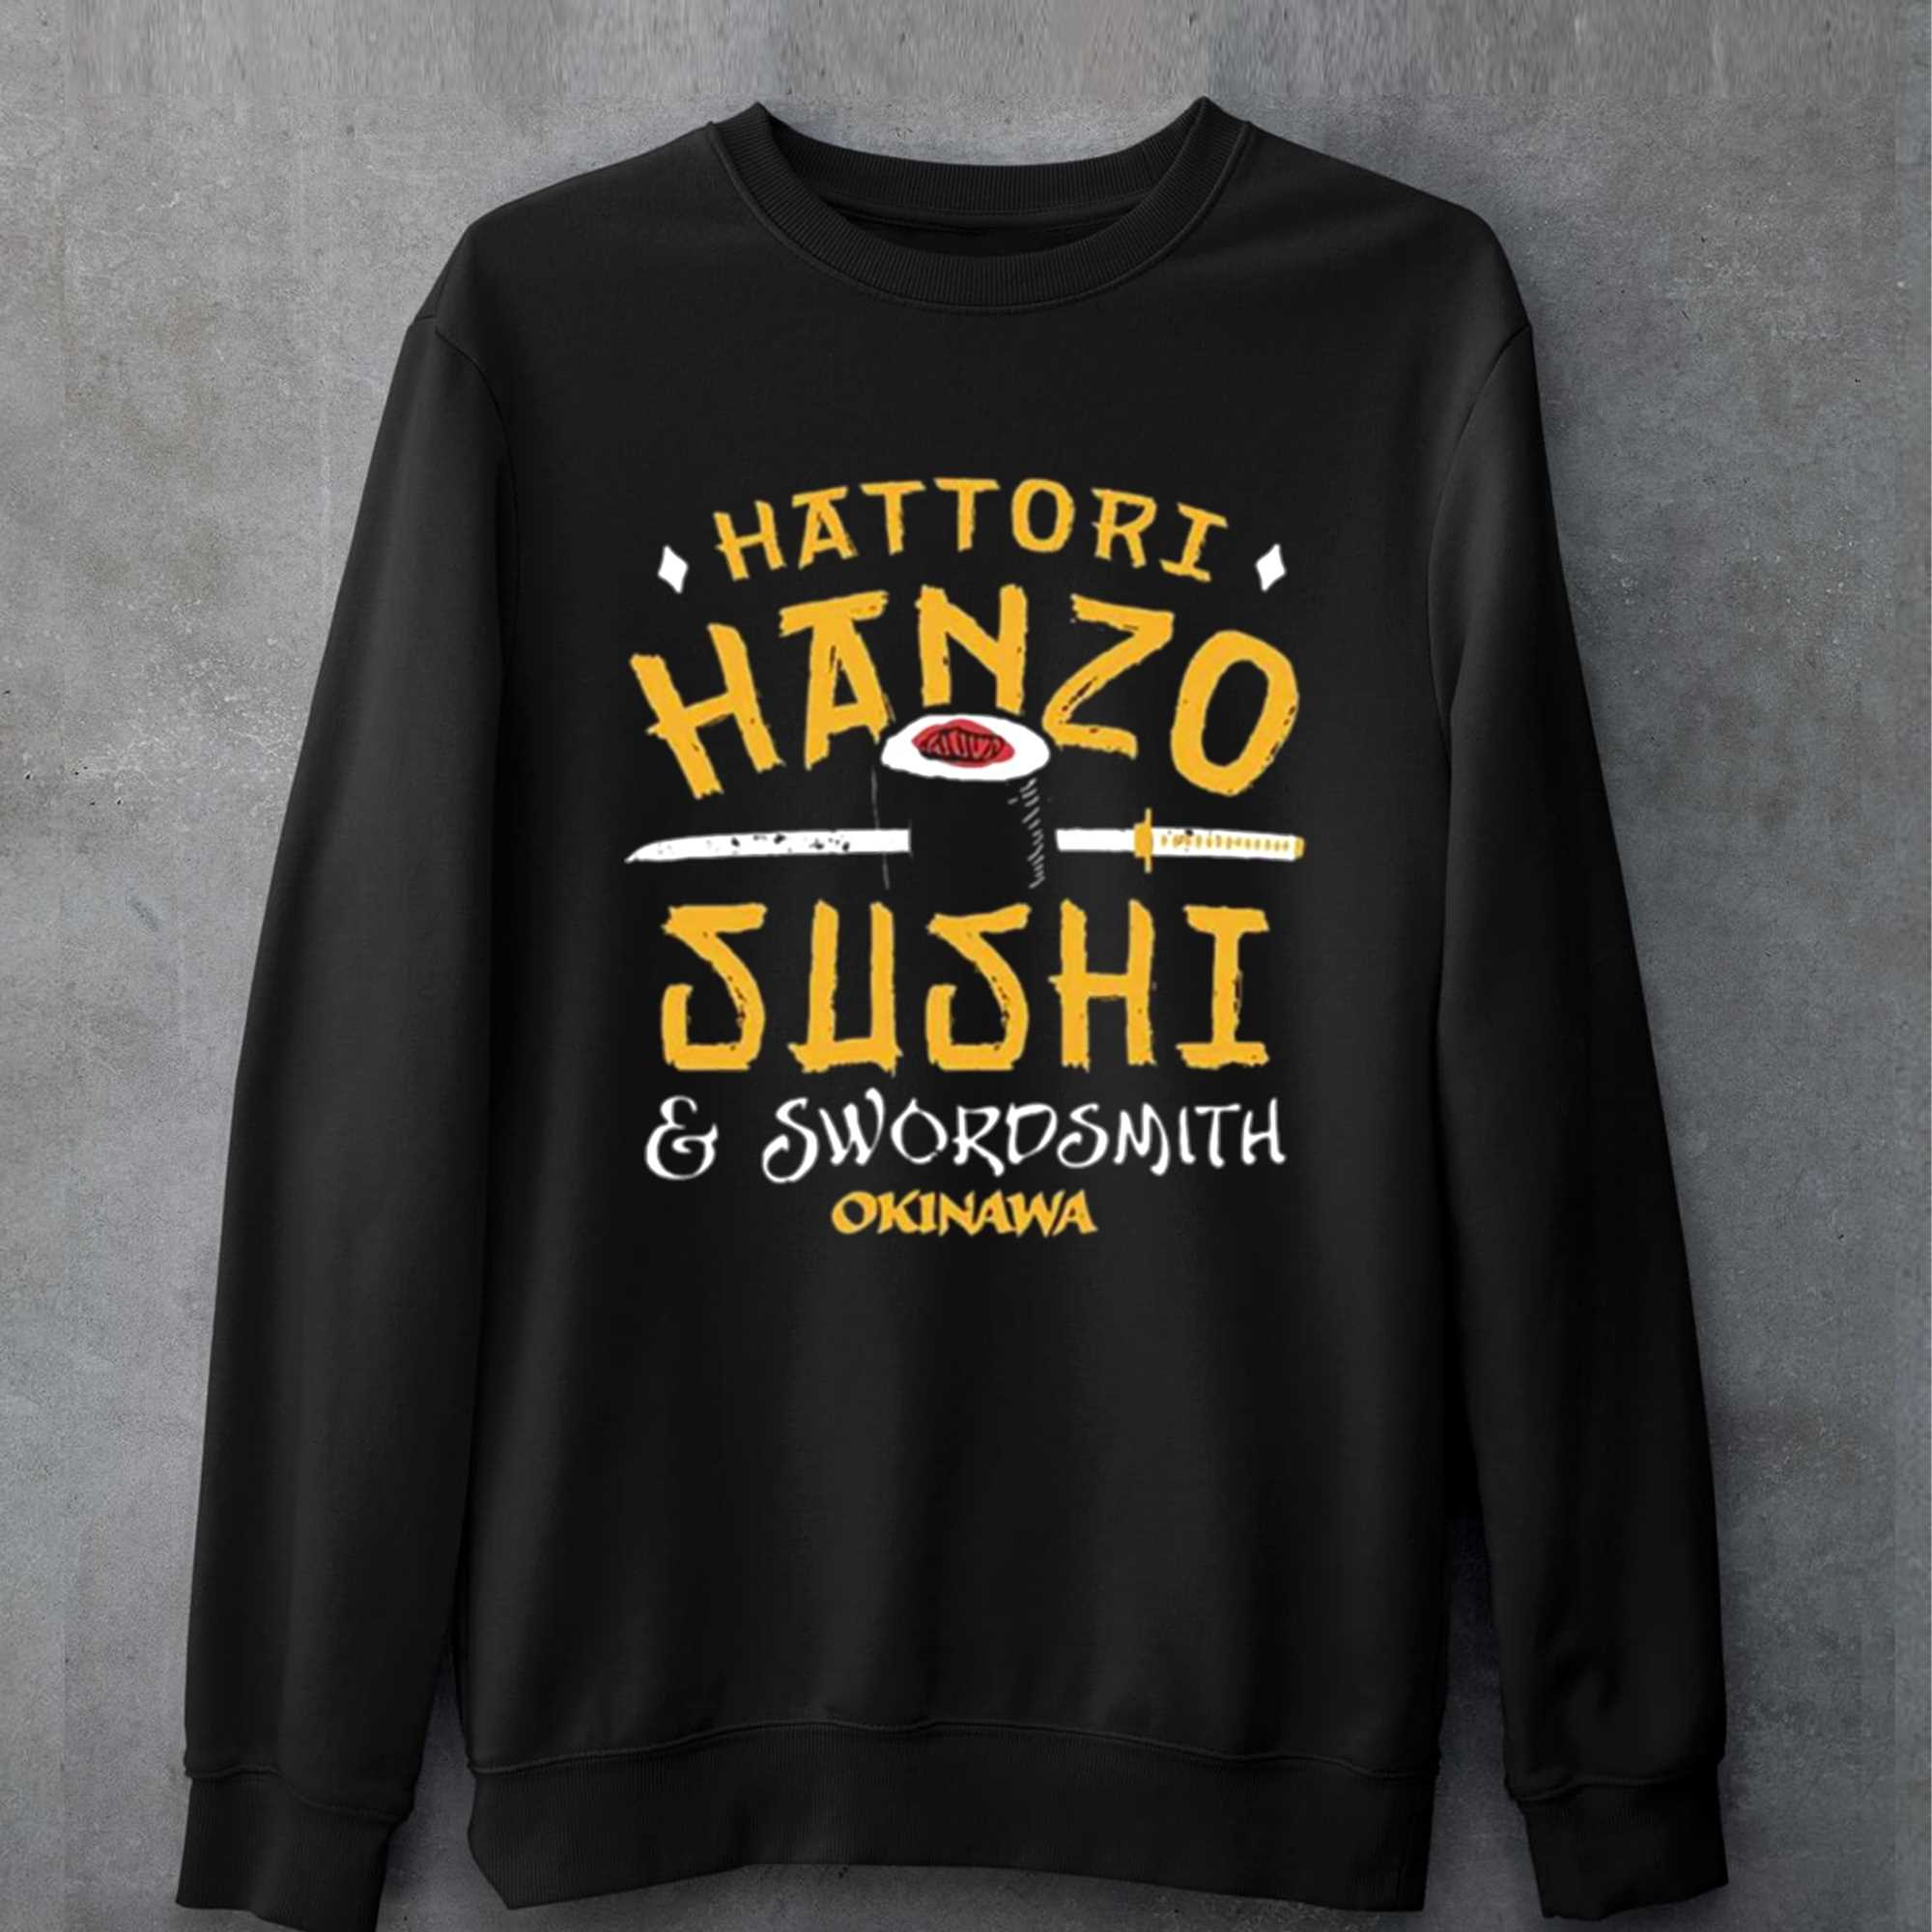 Hattori Hanzo Sushi Swordsmith Okinawa Shirt 